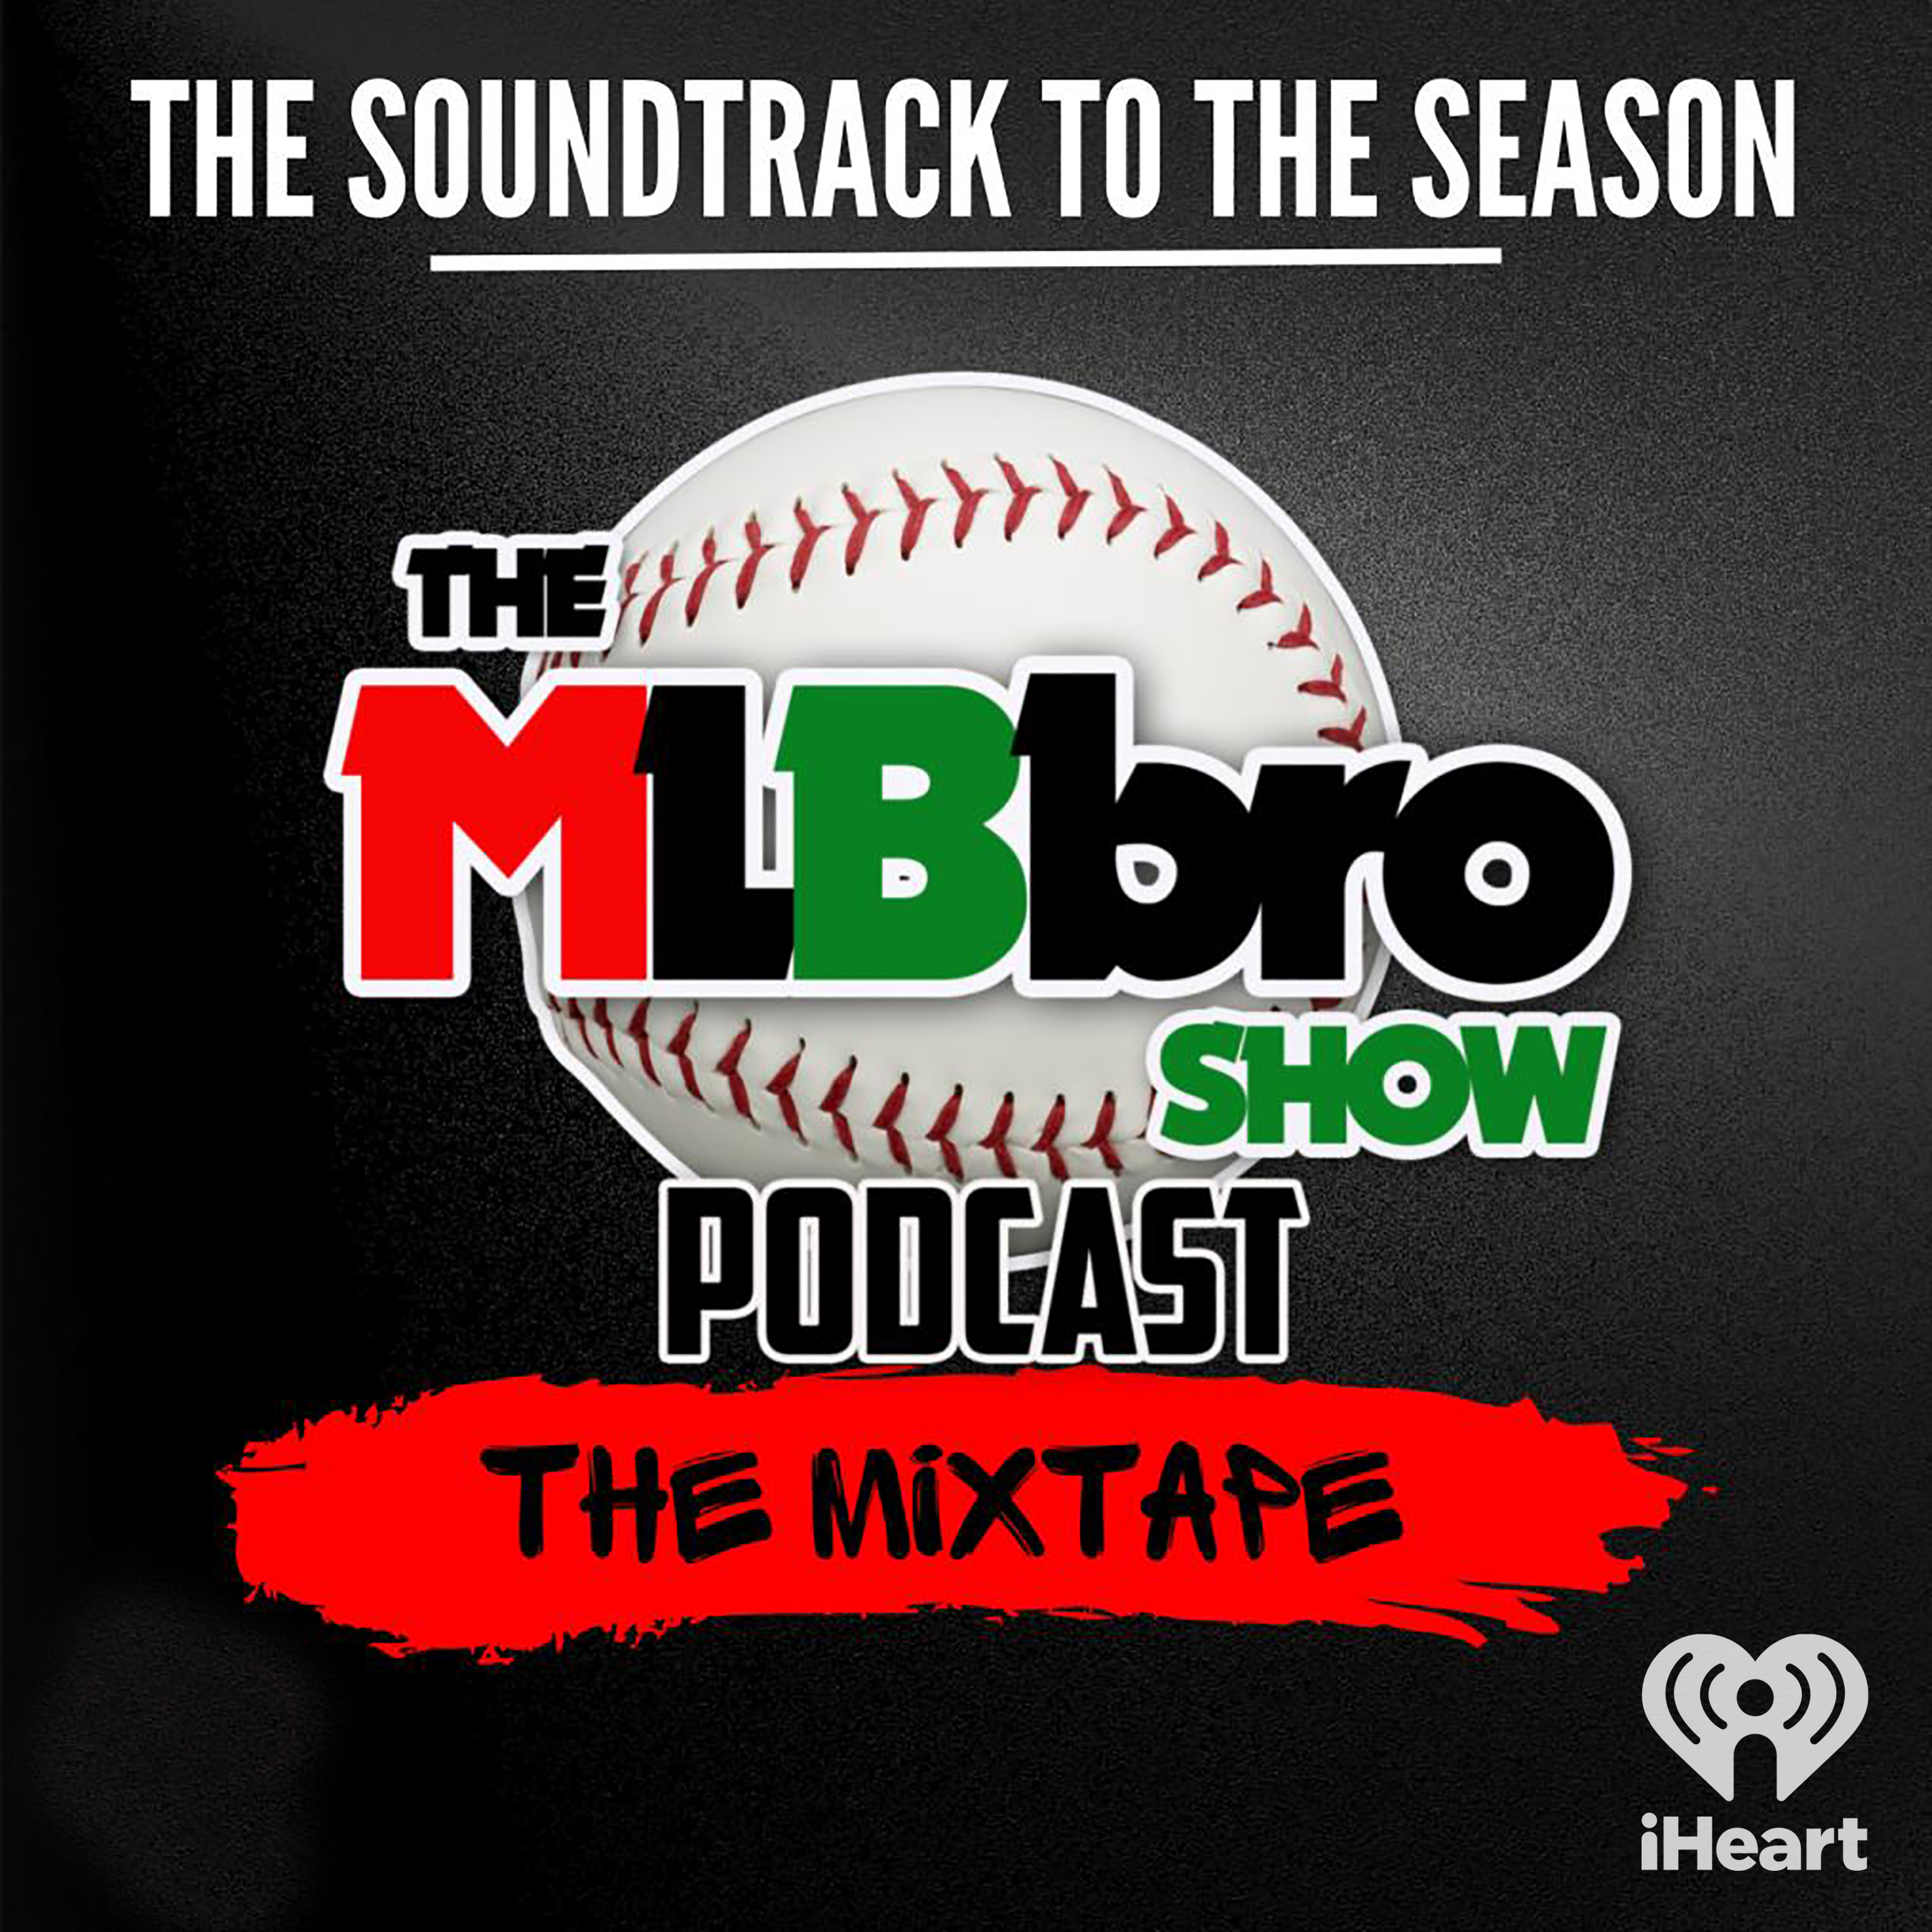 MLBbro Show Podcast The Mixtape Vol 4 Episode 6